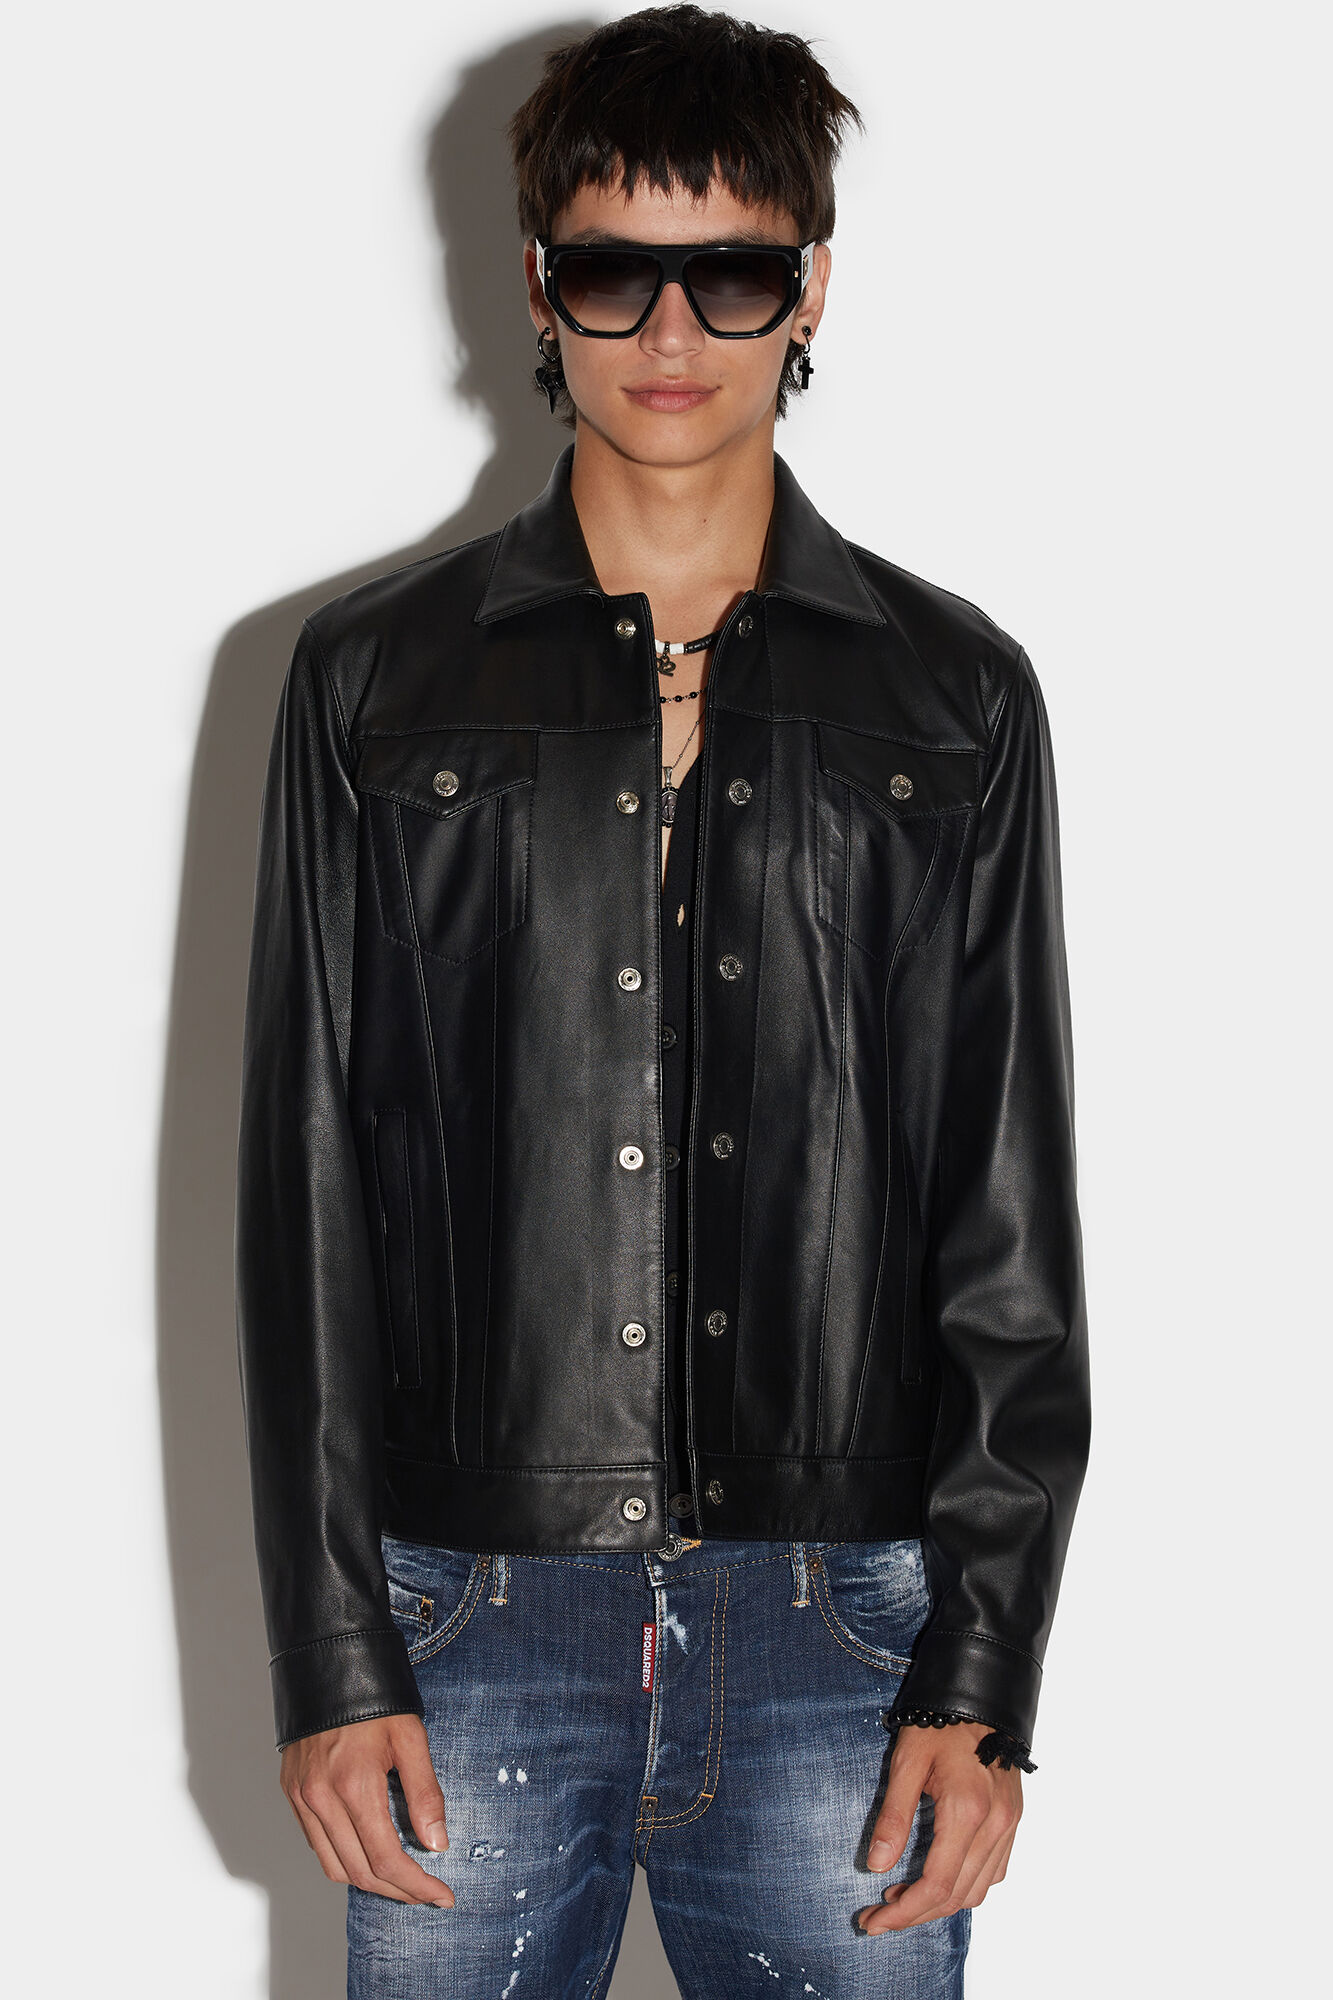 #dsquared #leather jacket